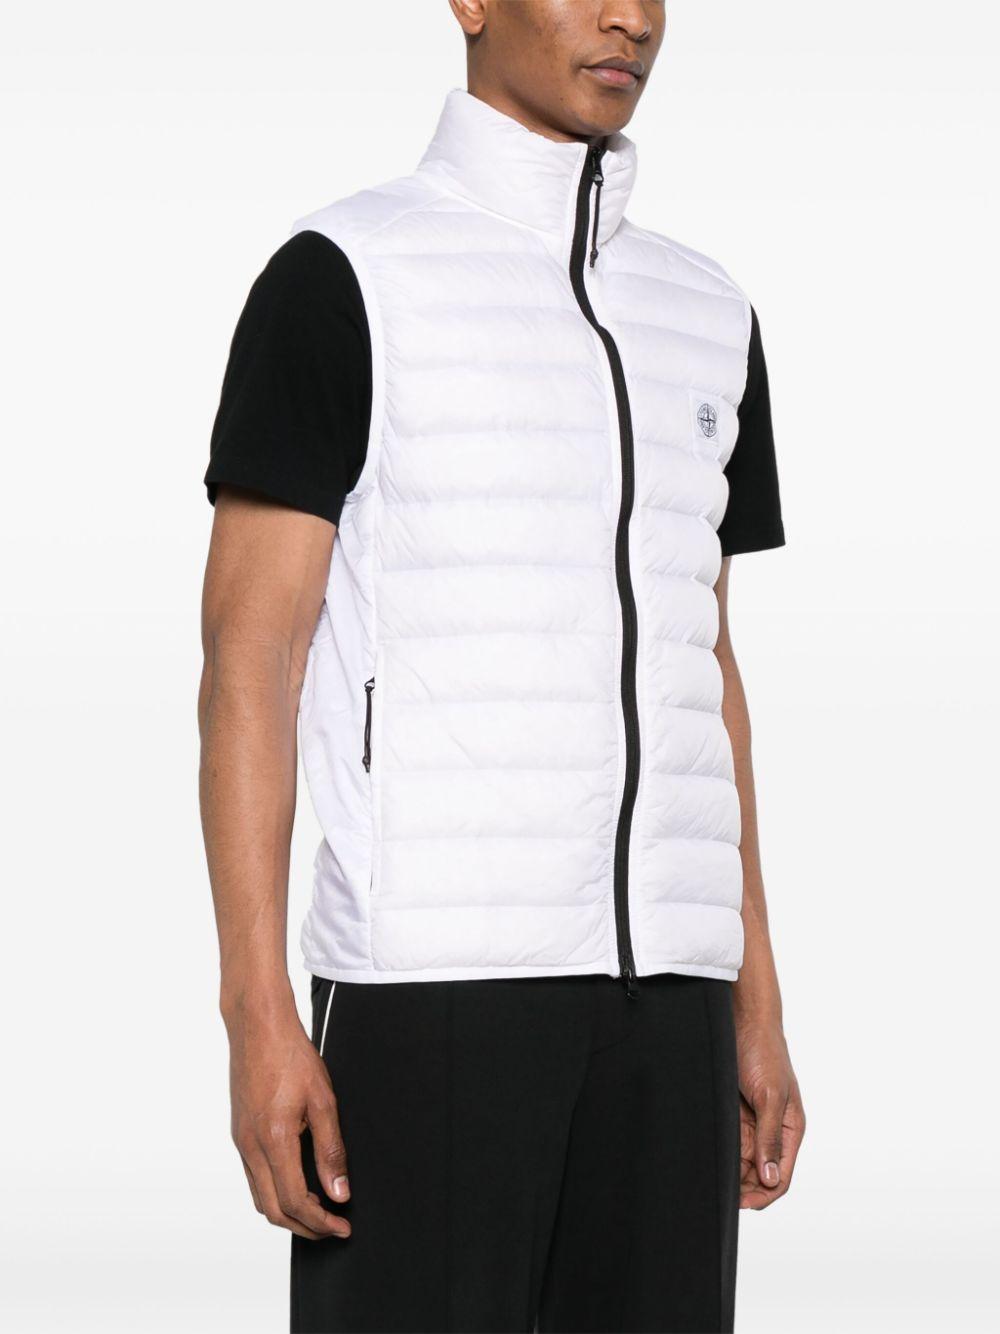 STONE ISLAND Lightweight Puffer Vest for Men in White